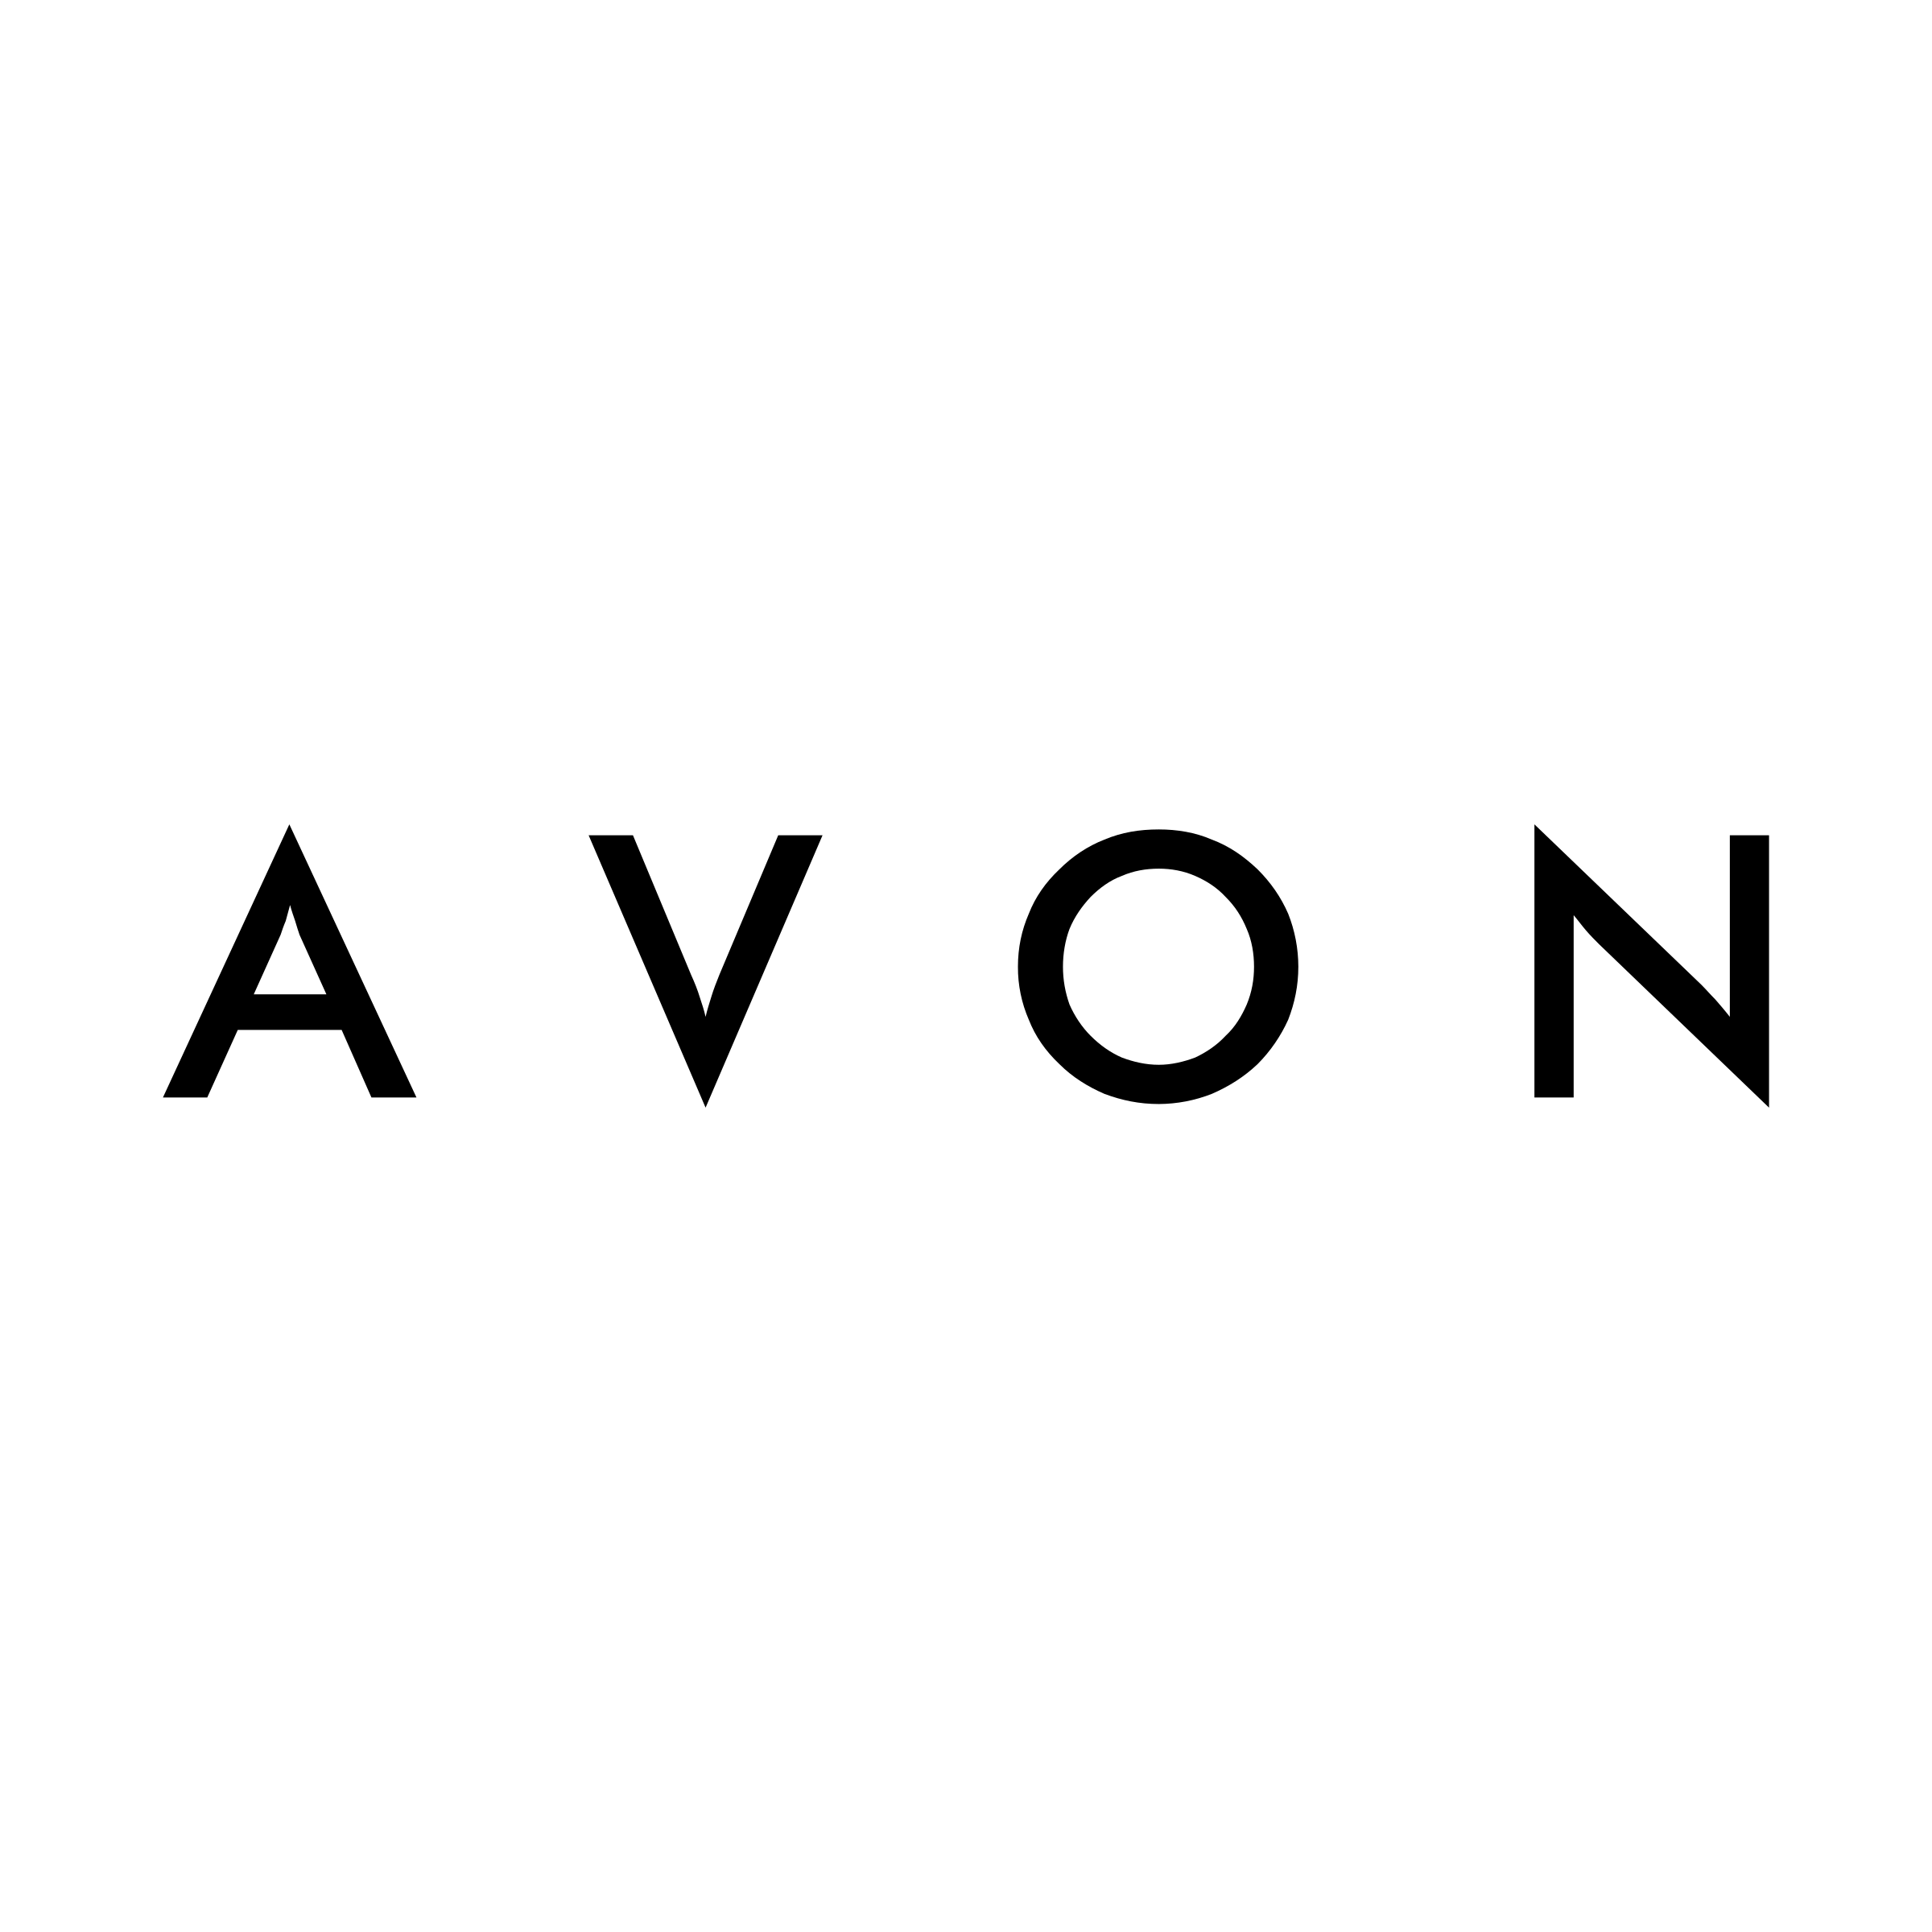 Avon Logo - Avon Logo PNG Transparent & SVG Vector - Freebie Supply